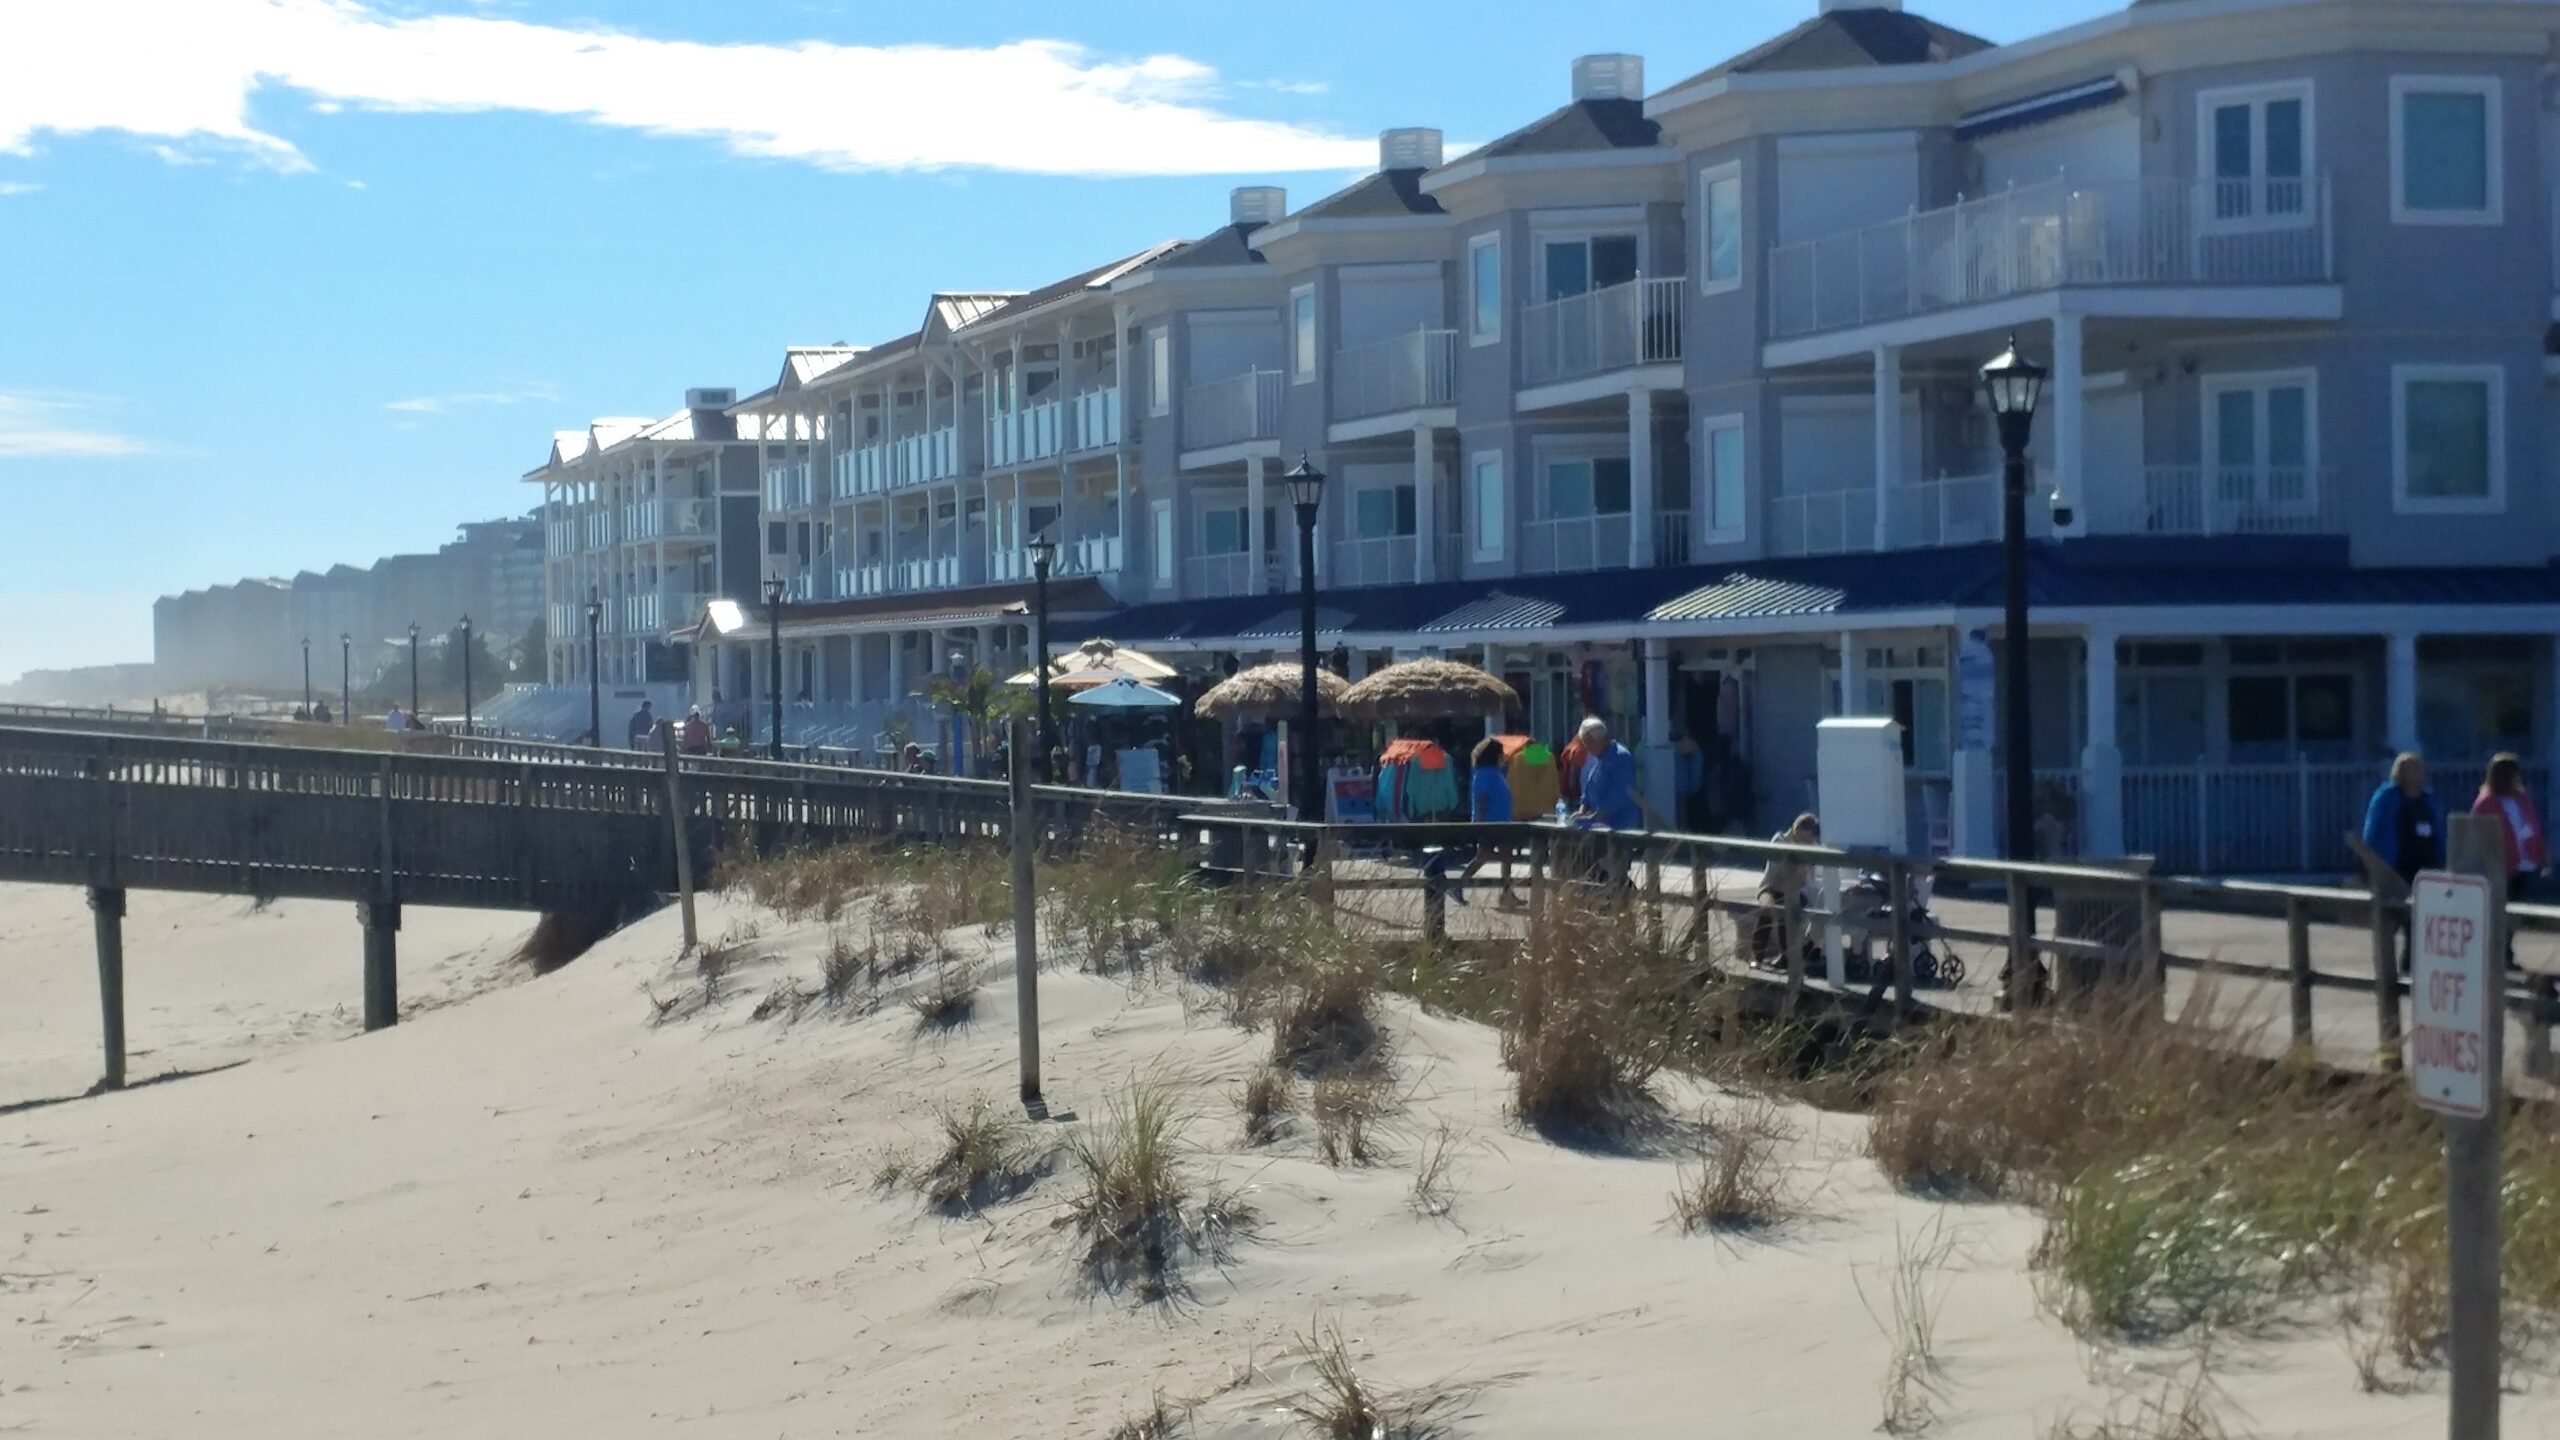 Go for a Walk along a Delaware Beach Boardwalk